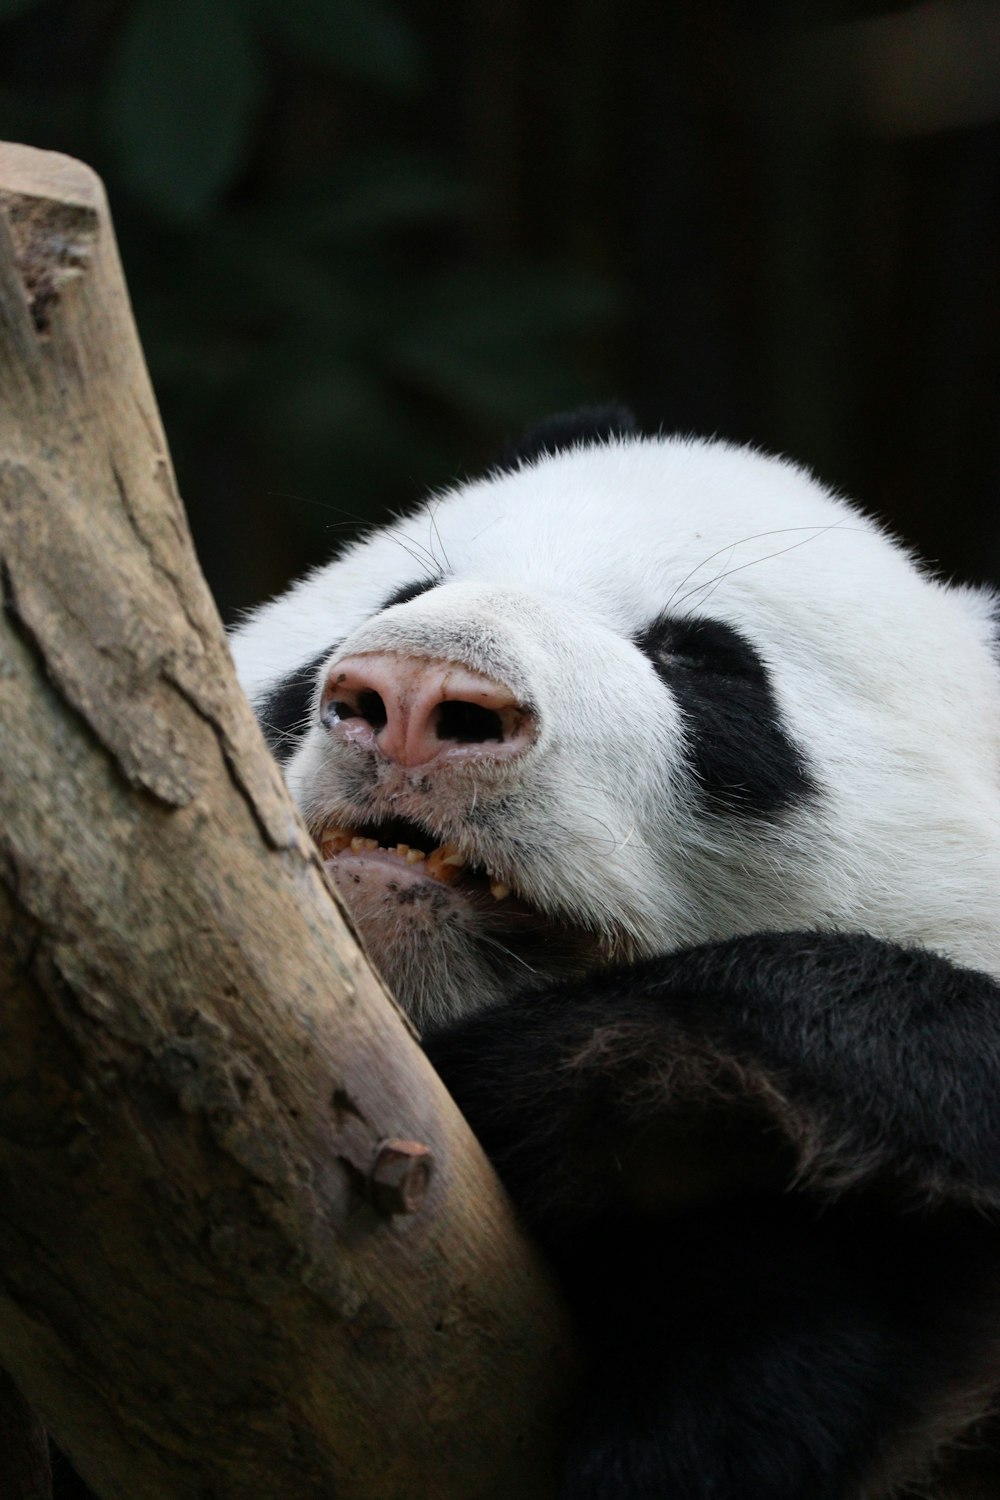 a panda bear sitting on top of a tree branch